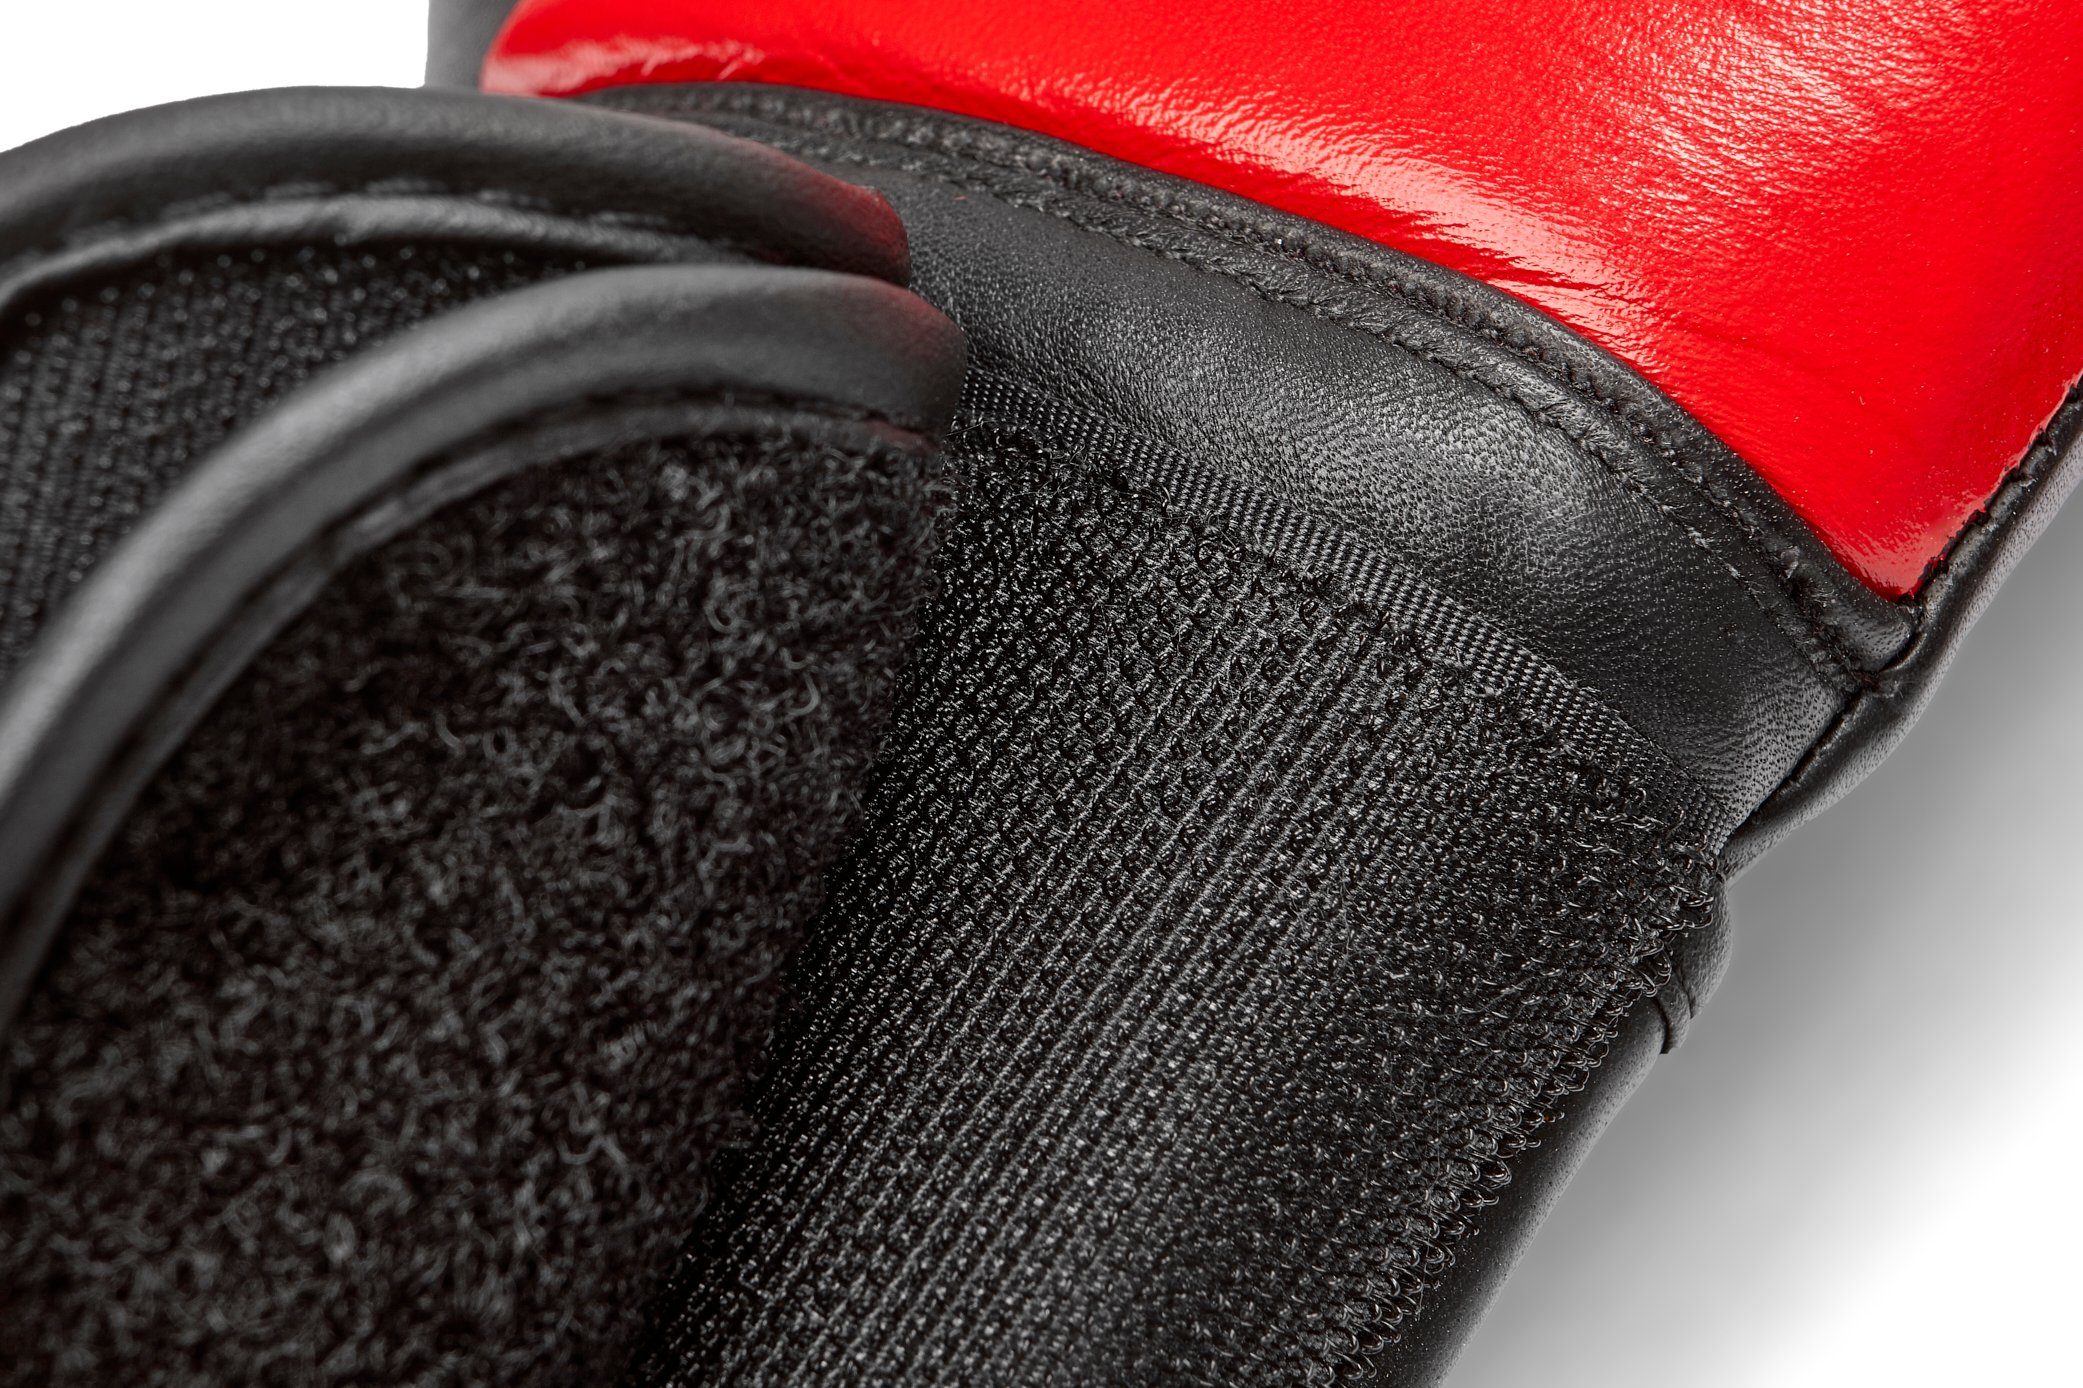 Boxhandschuhe Combat Rot/Schwarz, Griffbügel mit Reebok gepolsterten Reebok Leder-Boxhandschuhe